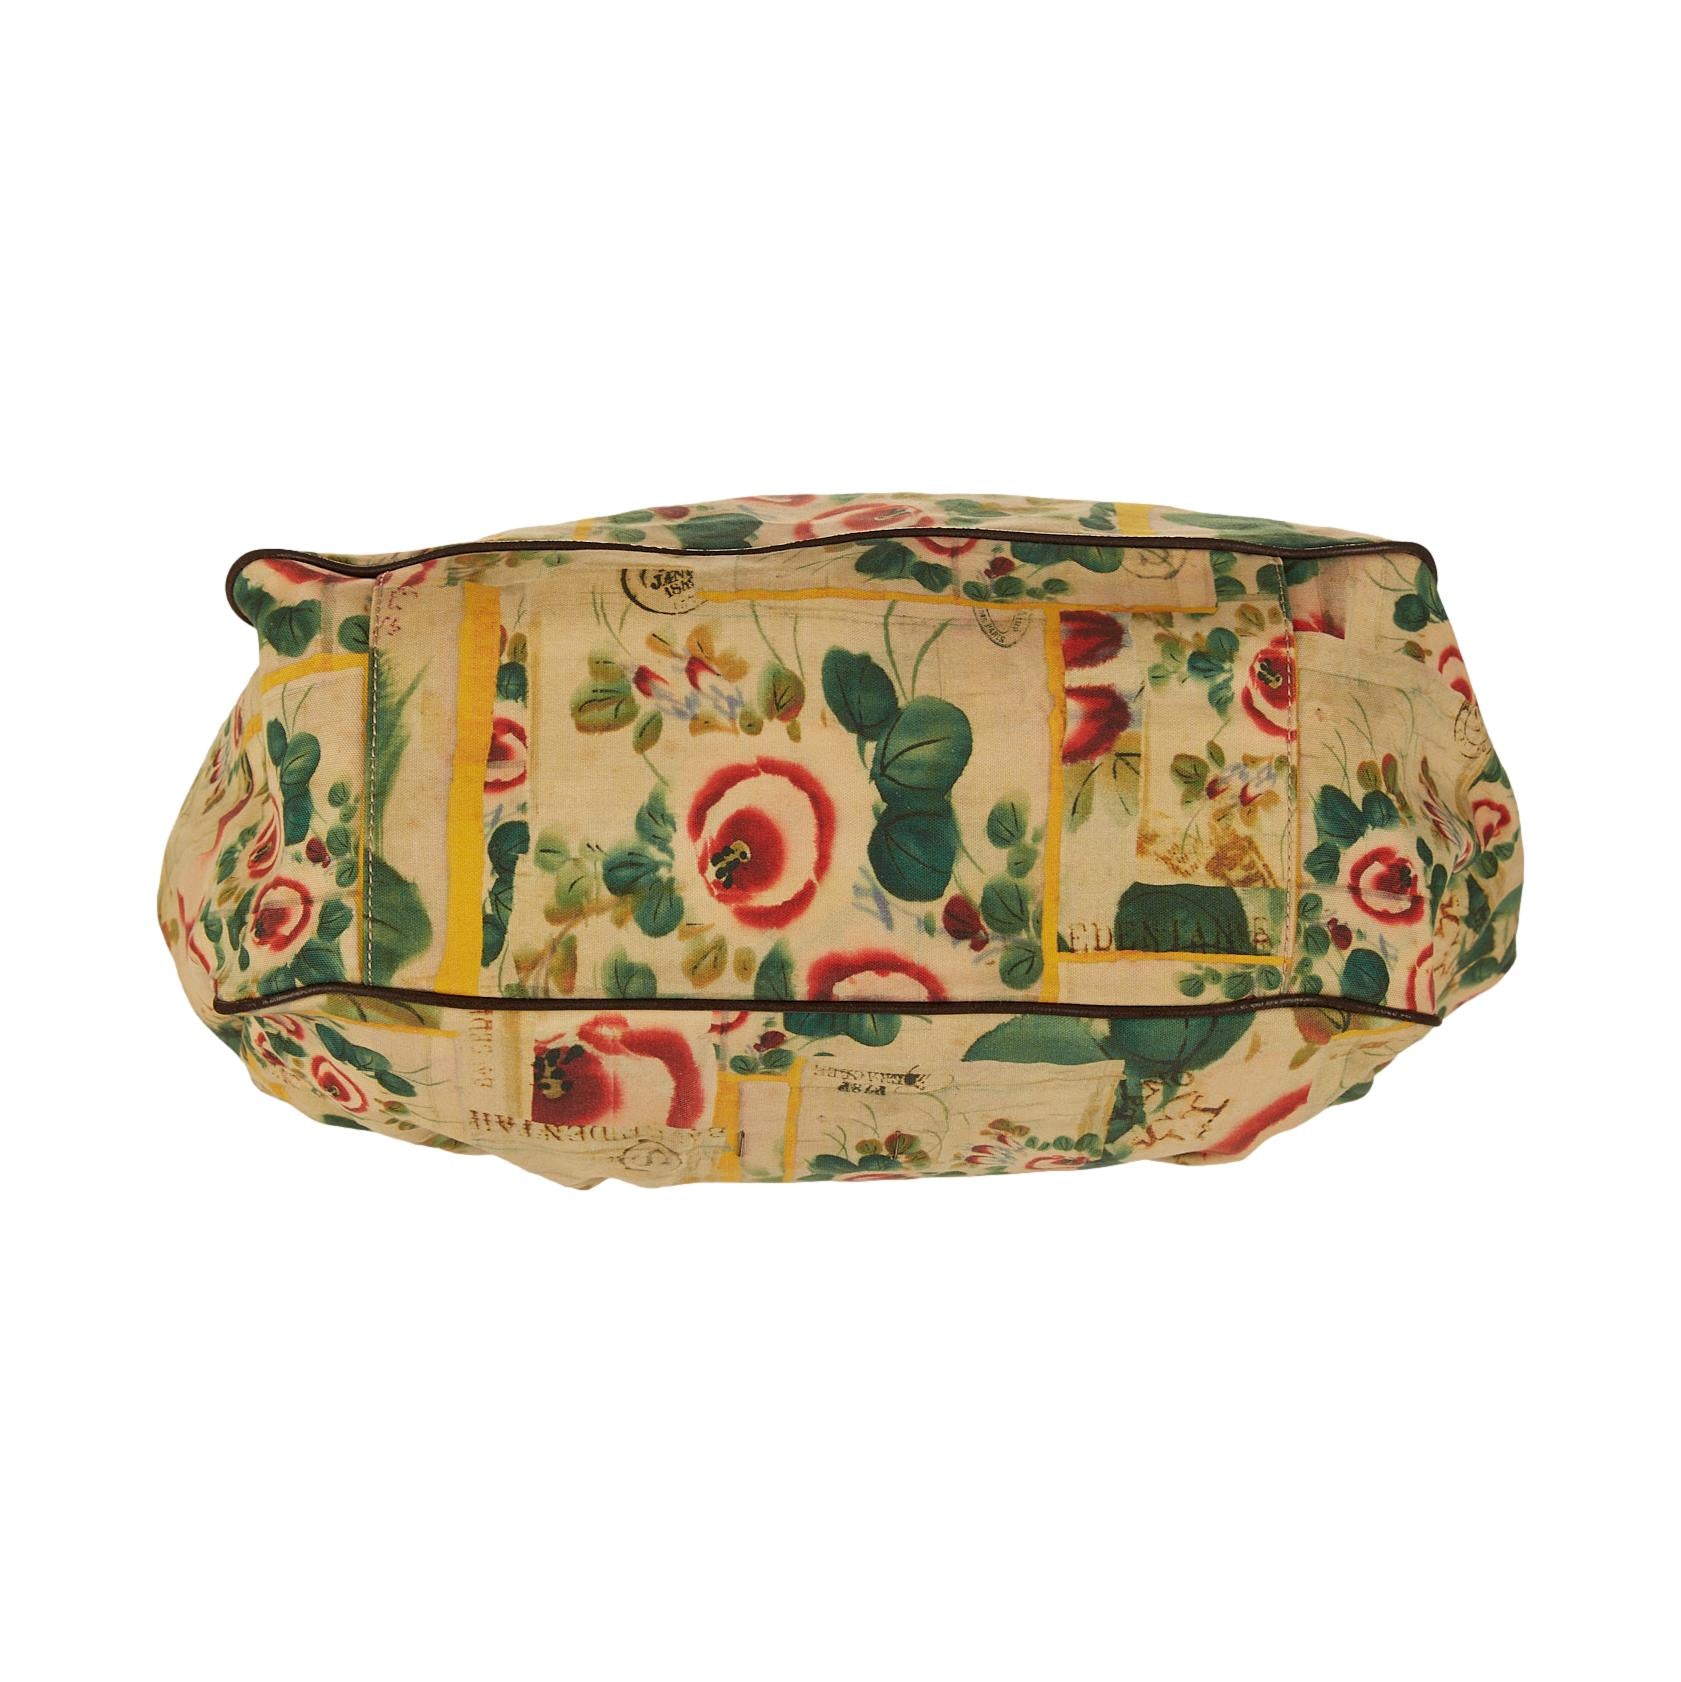 Jean Paul Gaultier Floral Print Shoulder Bag